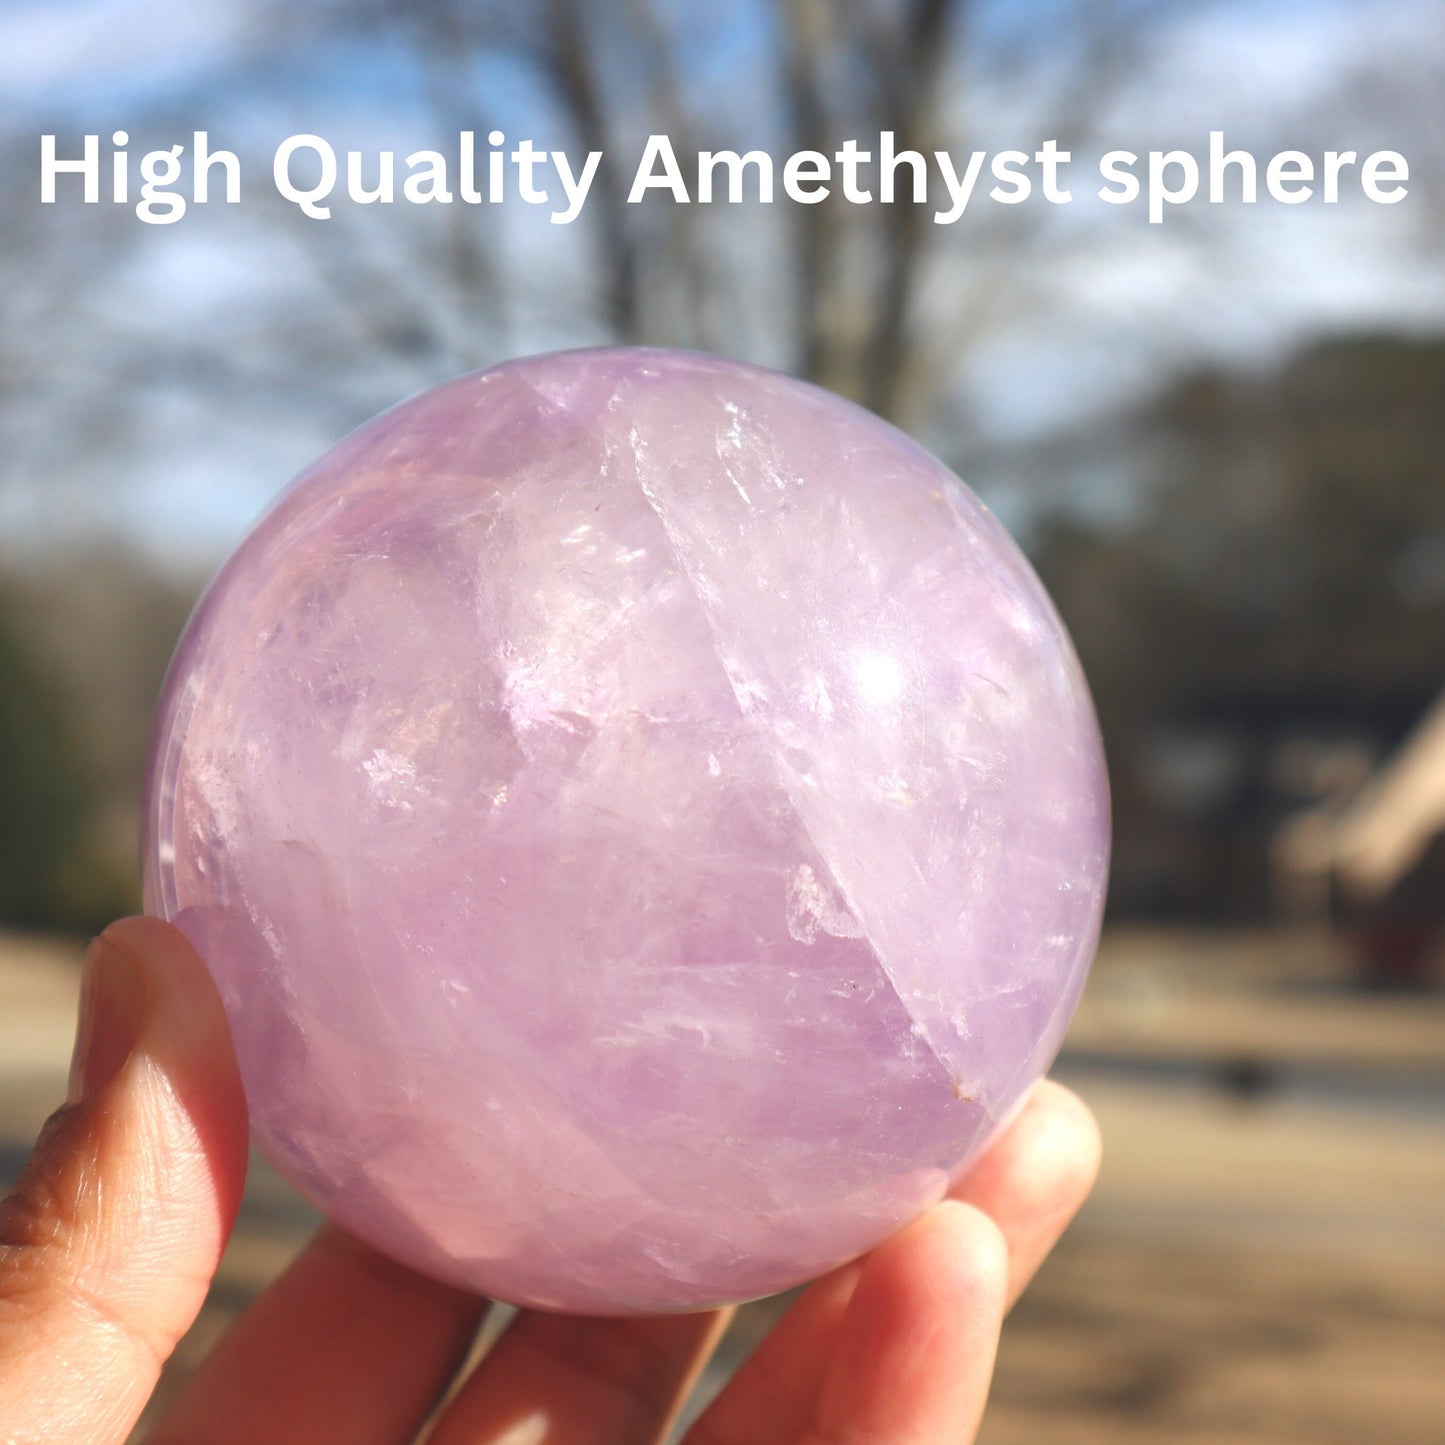 High Quality Amethyst Sphere, Big Crystal Sphere, Gemstone Rainbow Flash Amethyst Sphere, Natural Amethyst Quartz Crystal Ball, Large Sphere